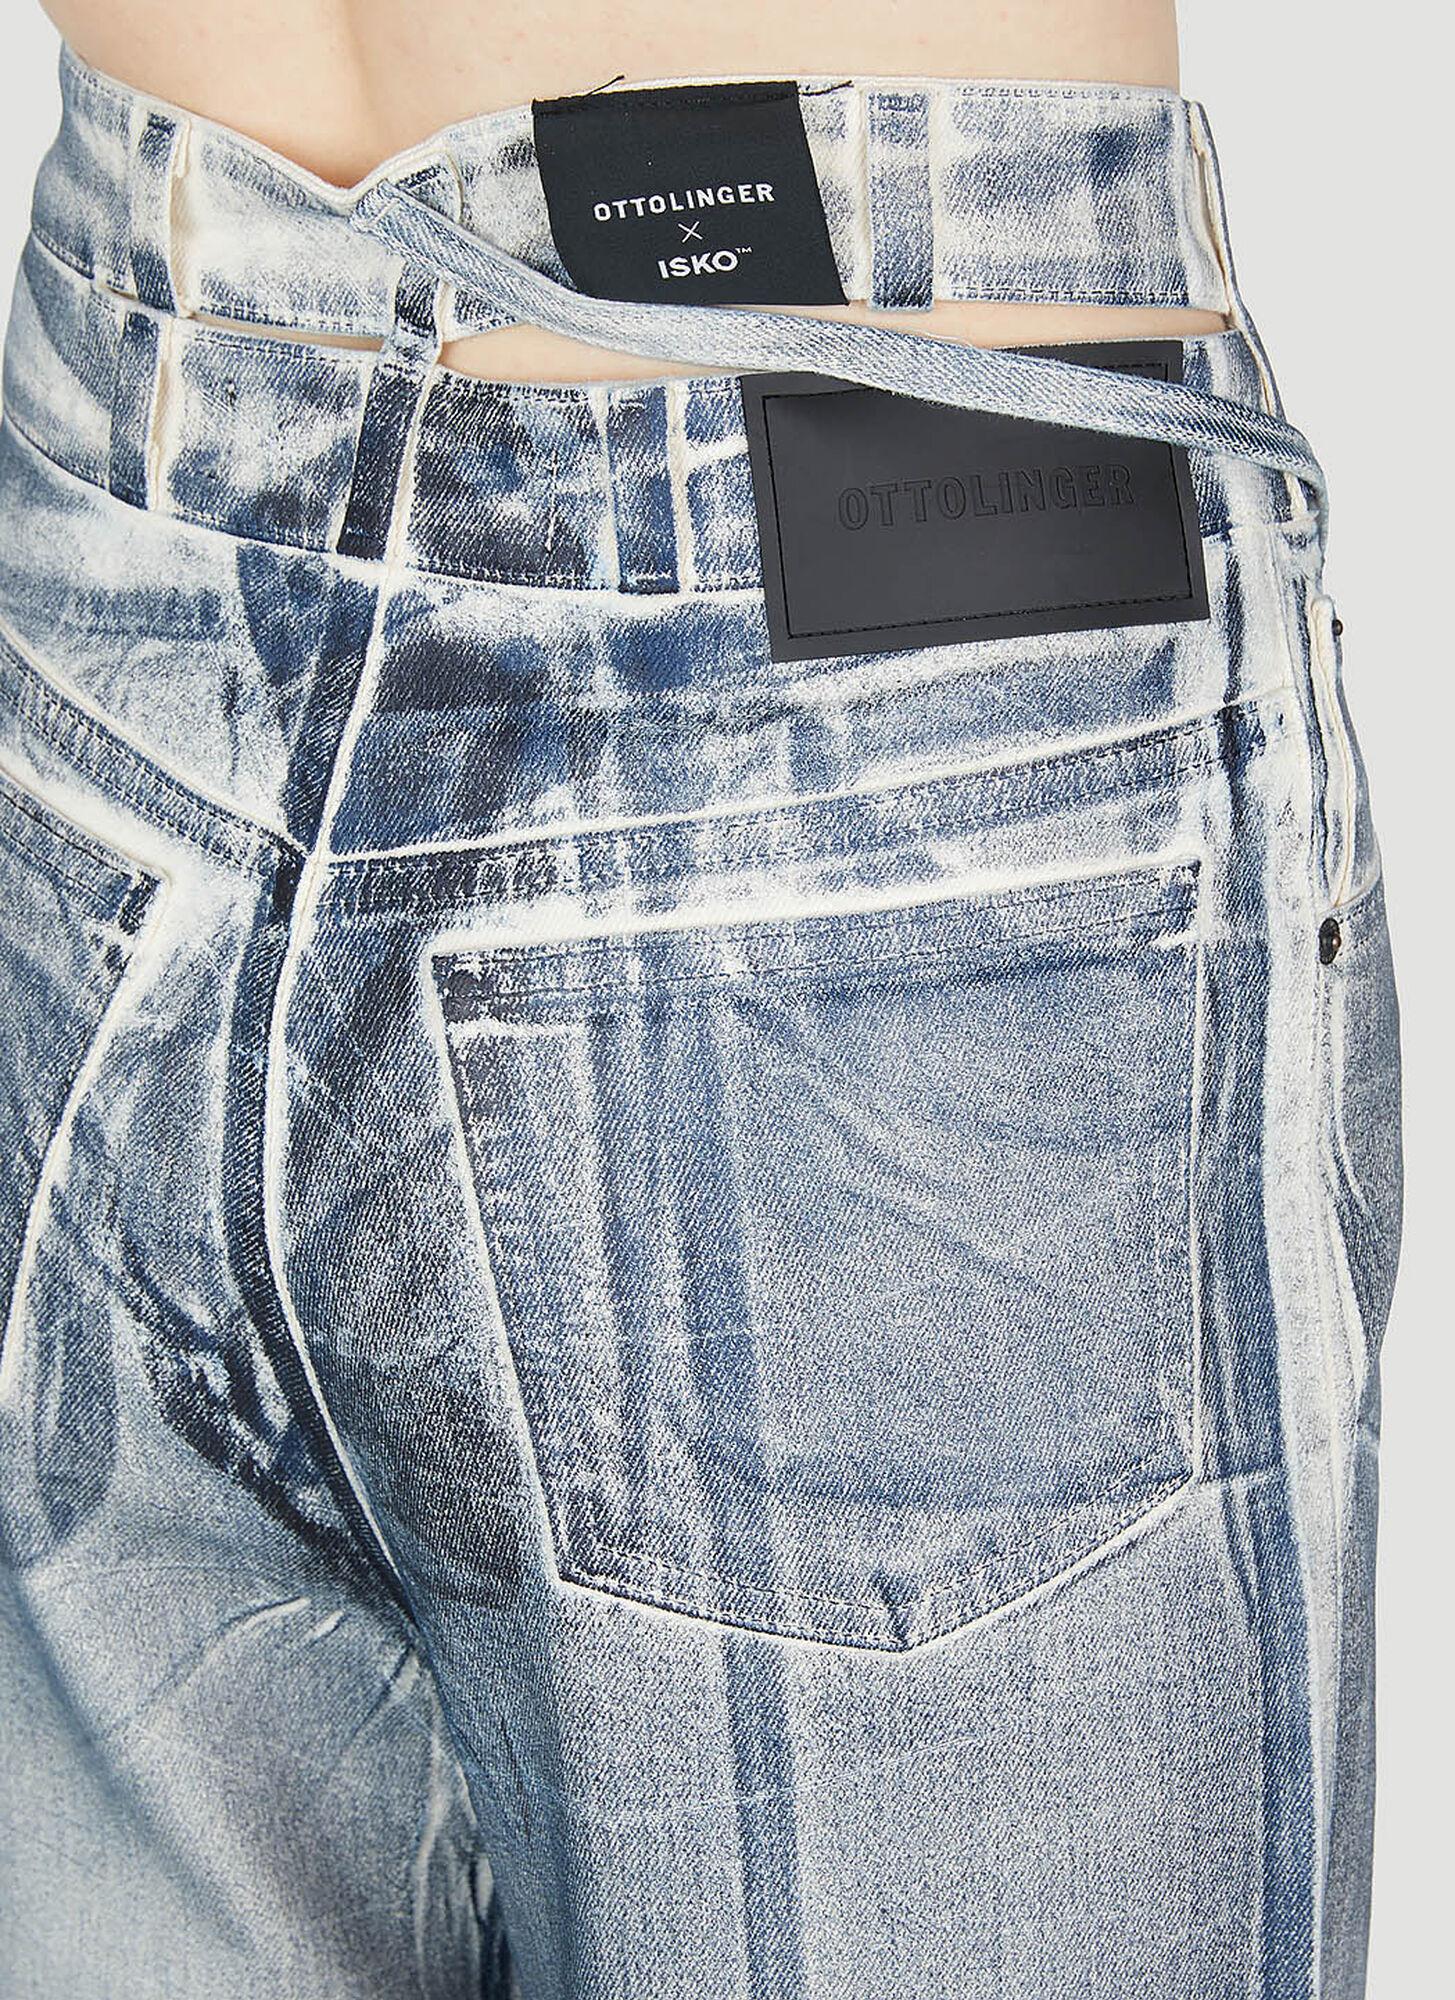 OTTOLINGER Draped Jeans in Blue | Lyst